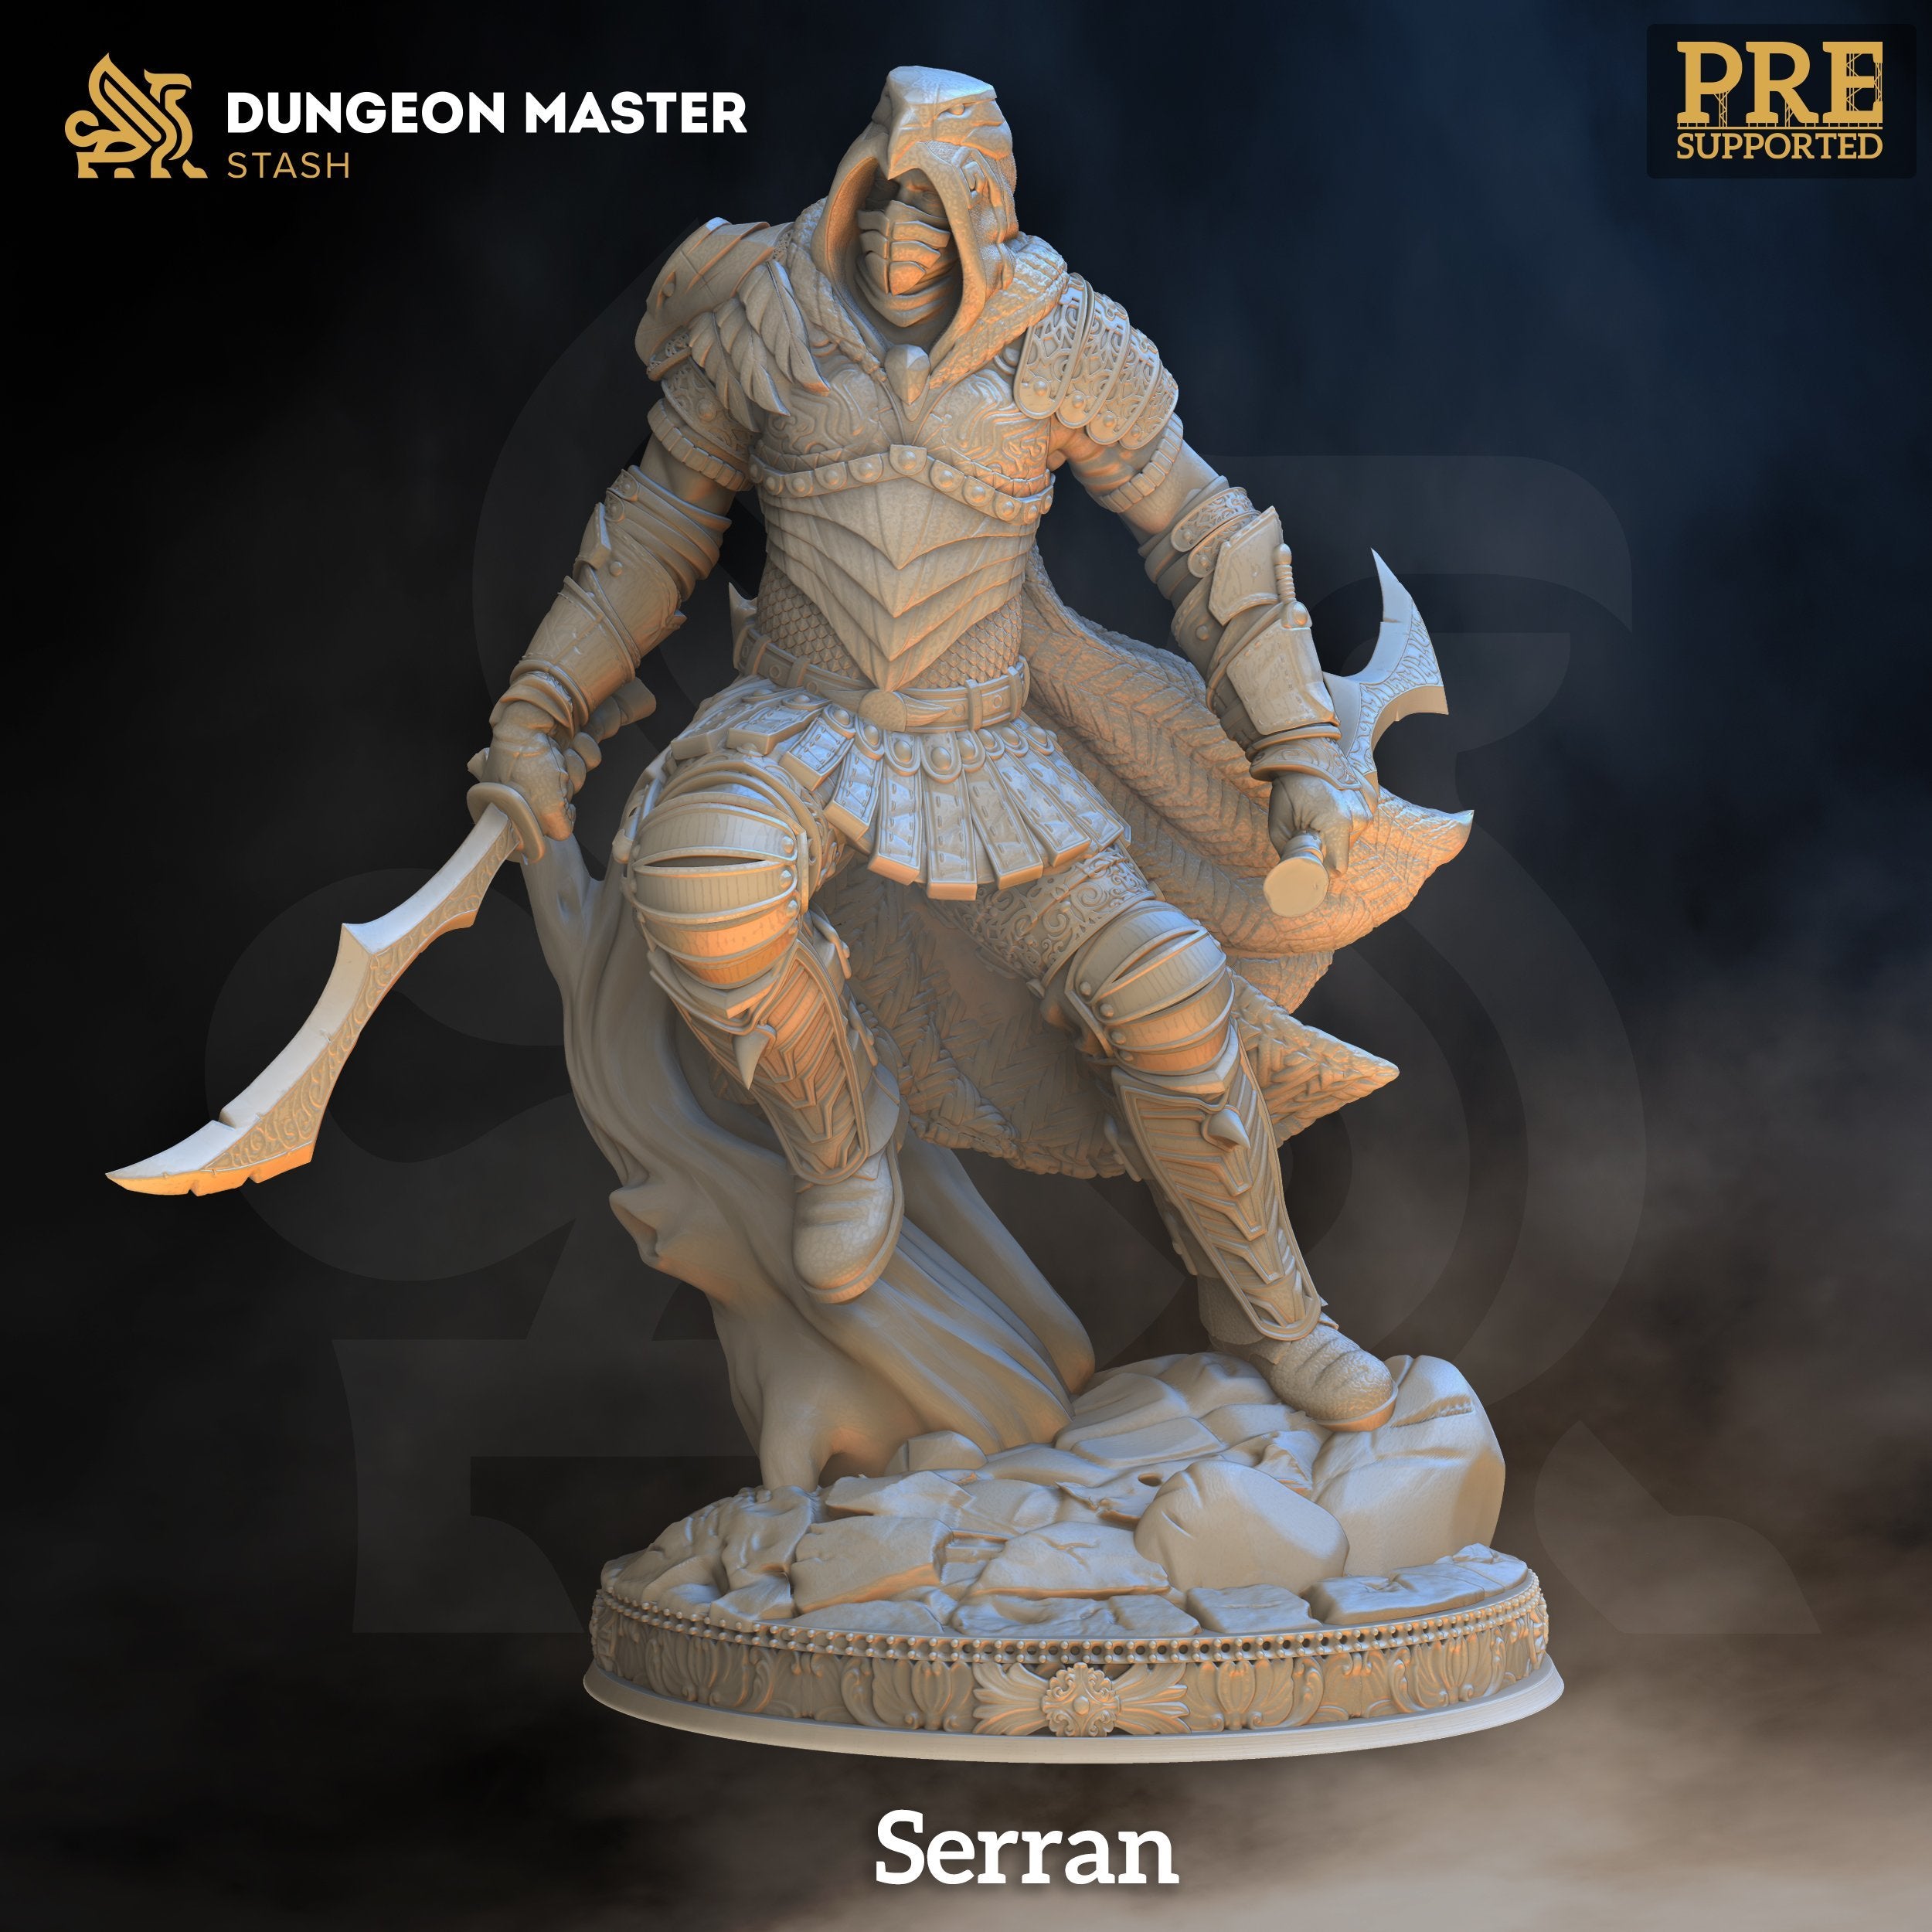 Serran - The Printable Dragon